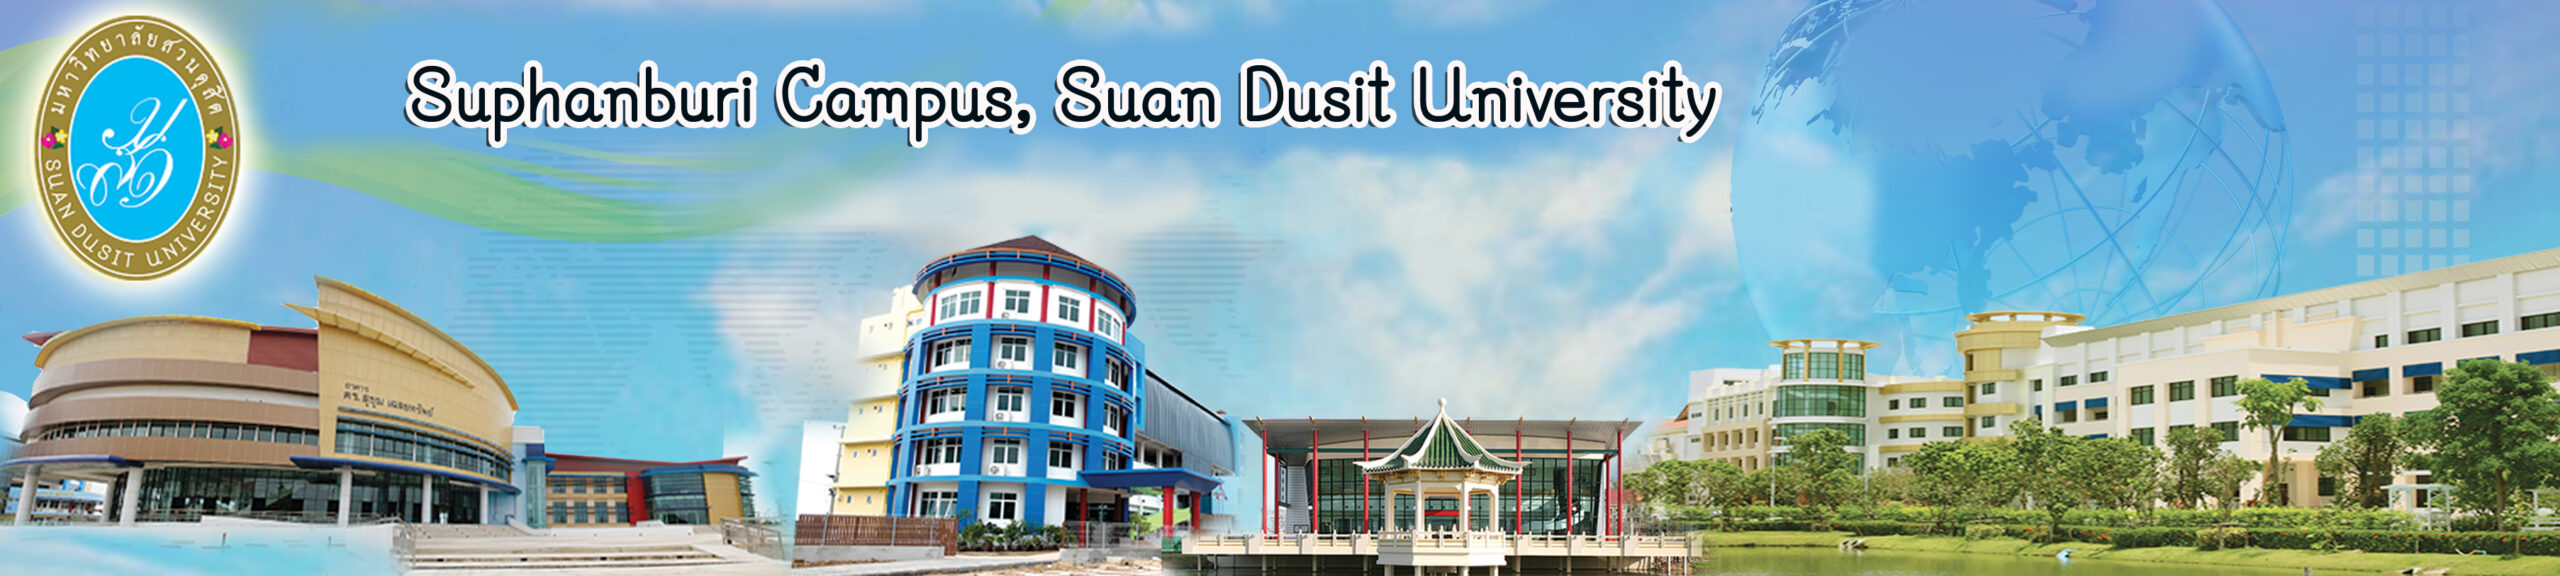 SDU Suphanburi